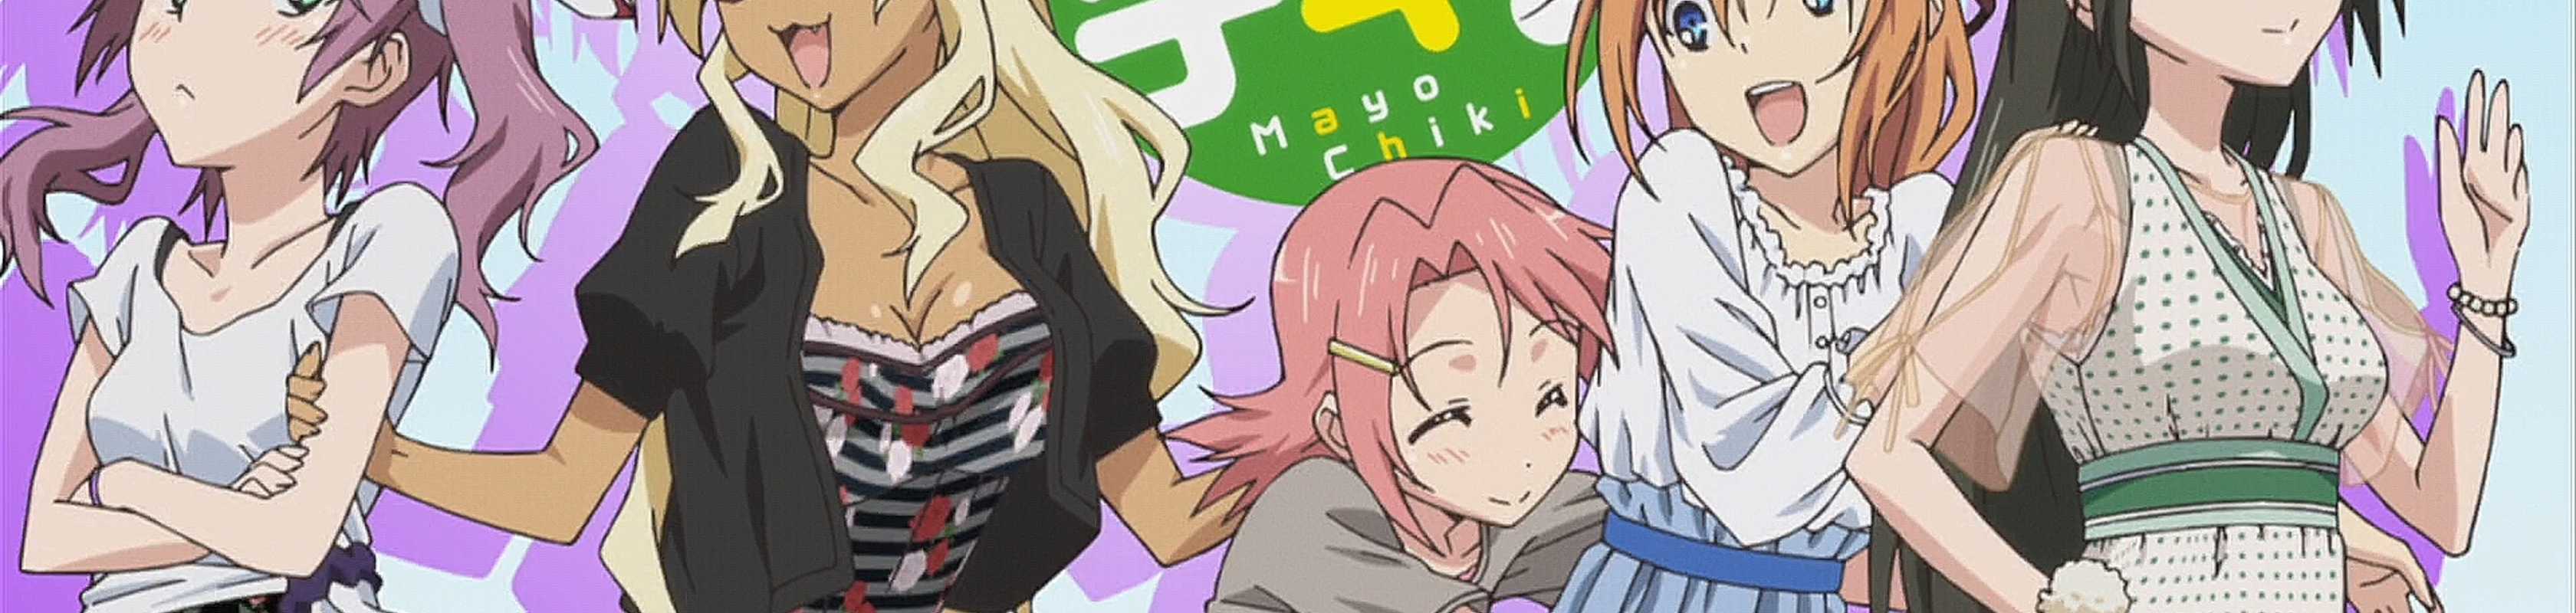 Anime Like Mayo Chiki!